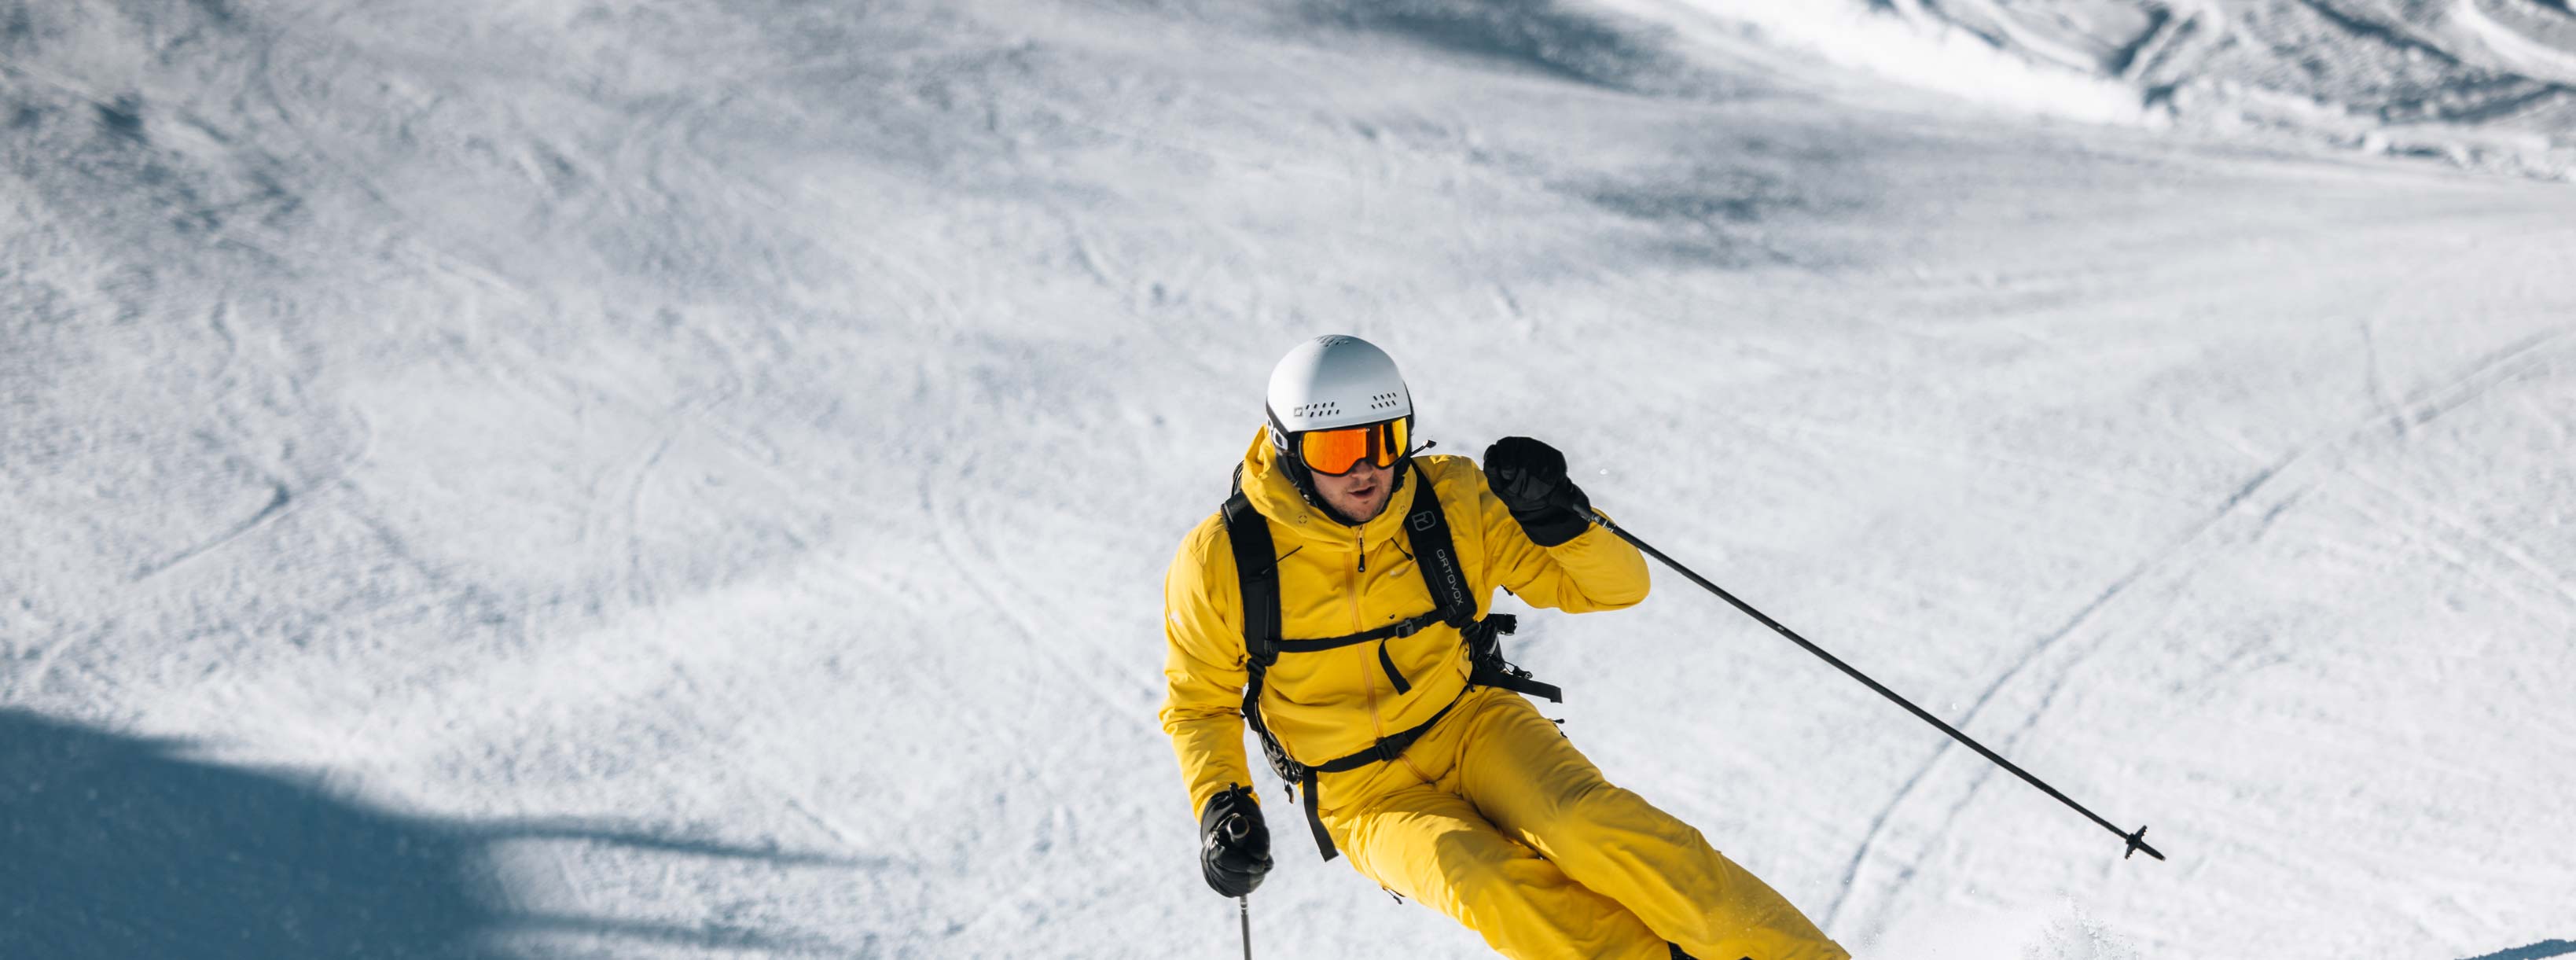 What to wear under a ski jacket?